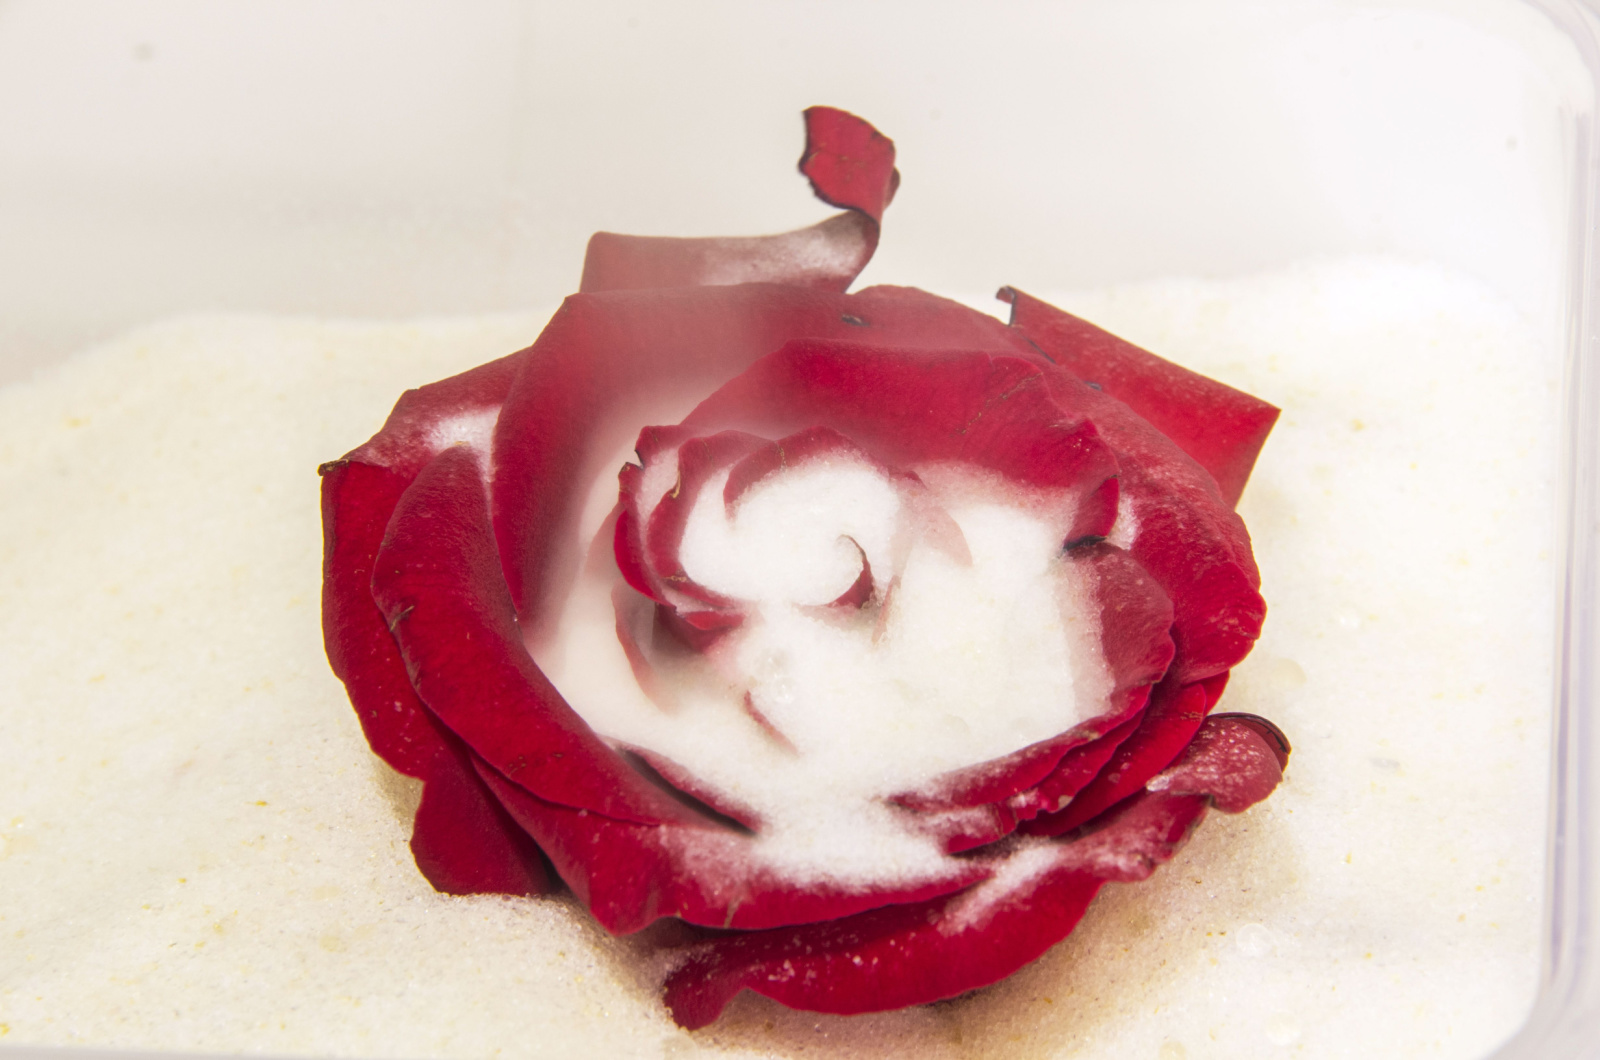 Red Rose buried in silica gel